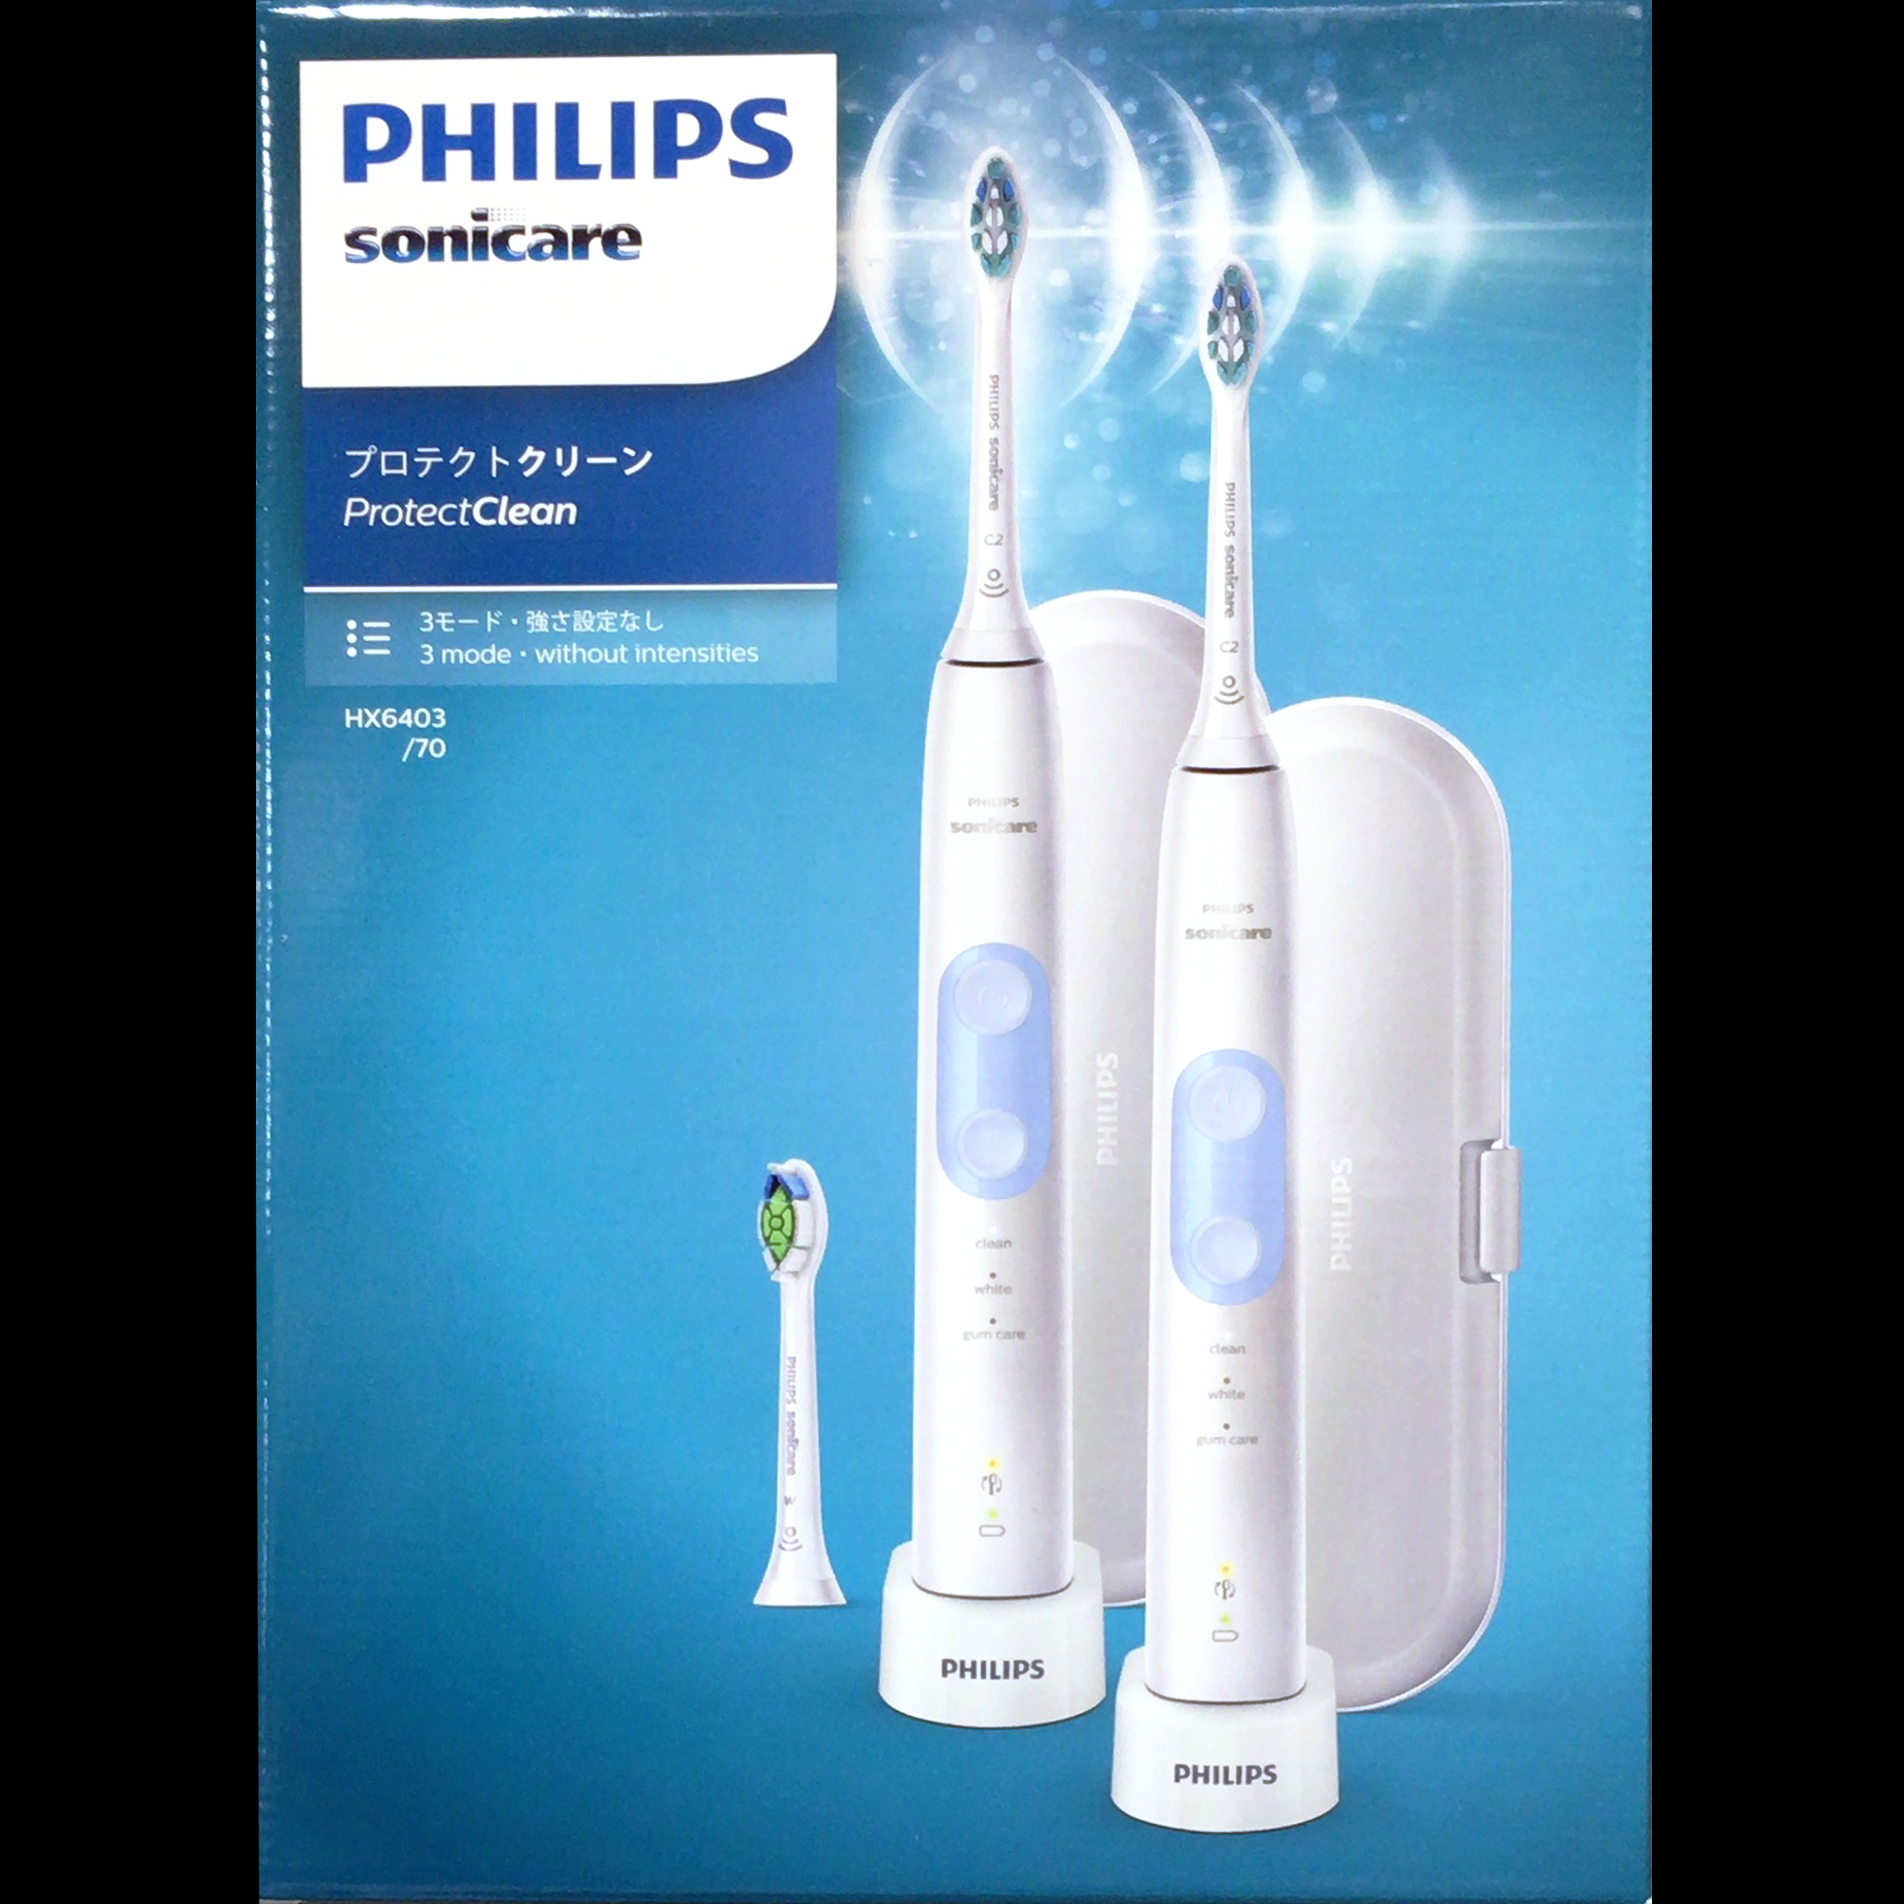 Philips Sonicare フィリップス ソニッケアー プロテクトクリーン 電動歯ブラシのクチコミ:コストコで在庫番